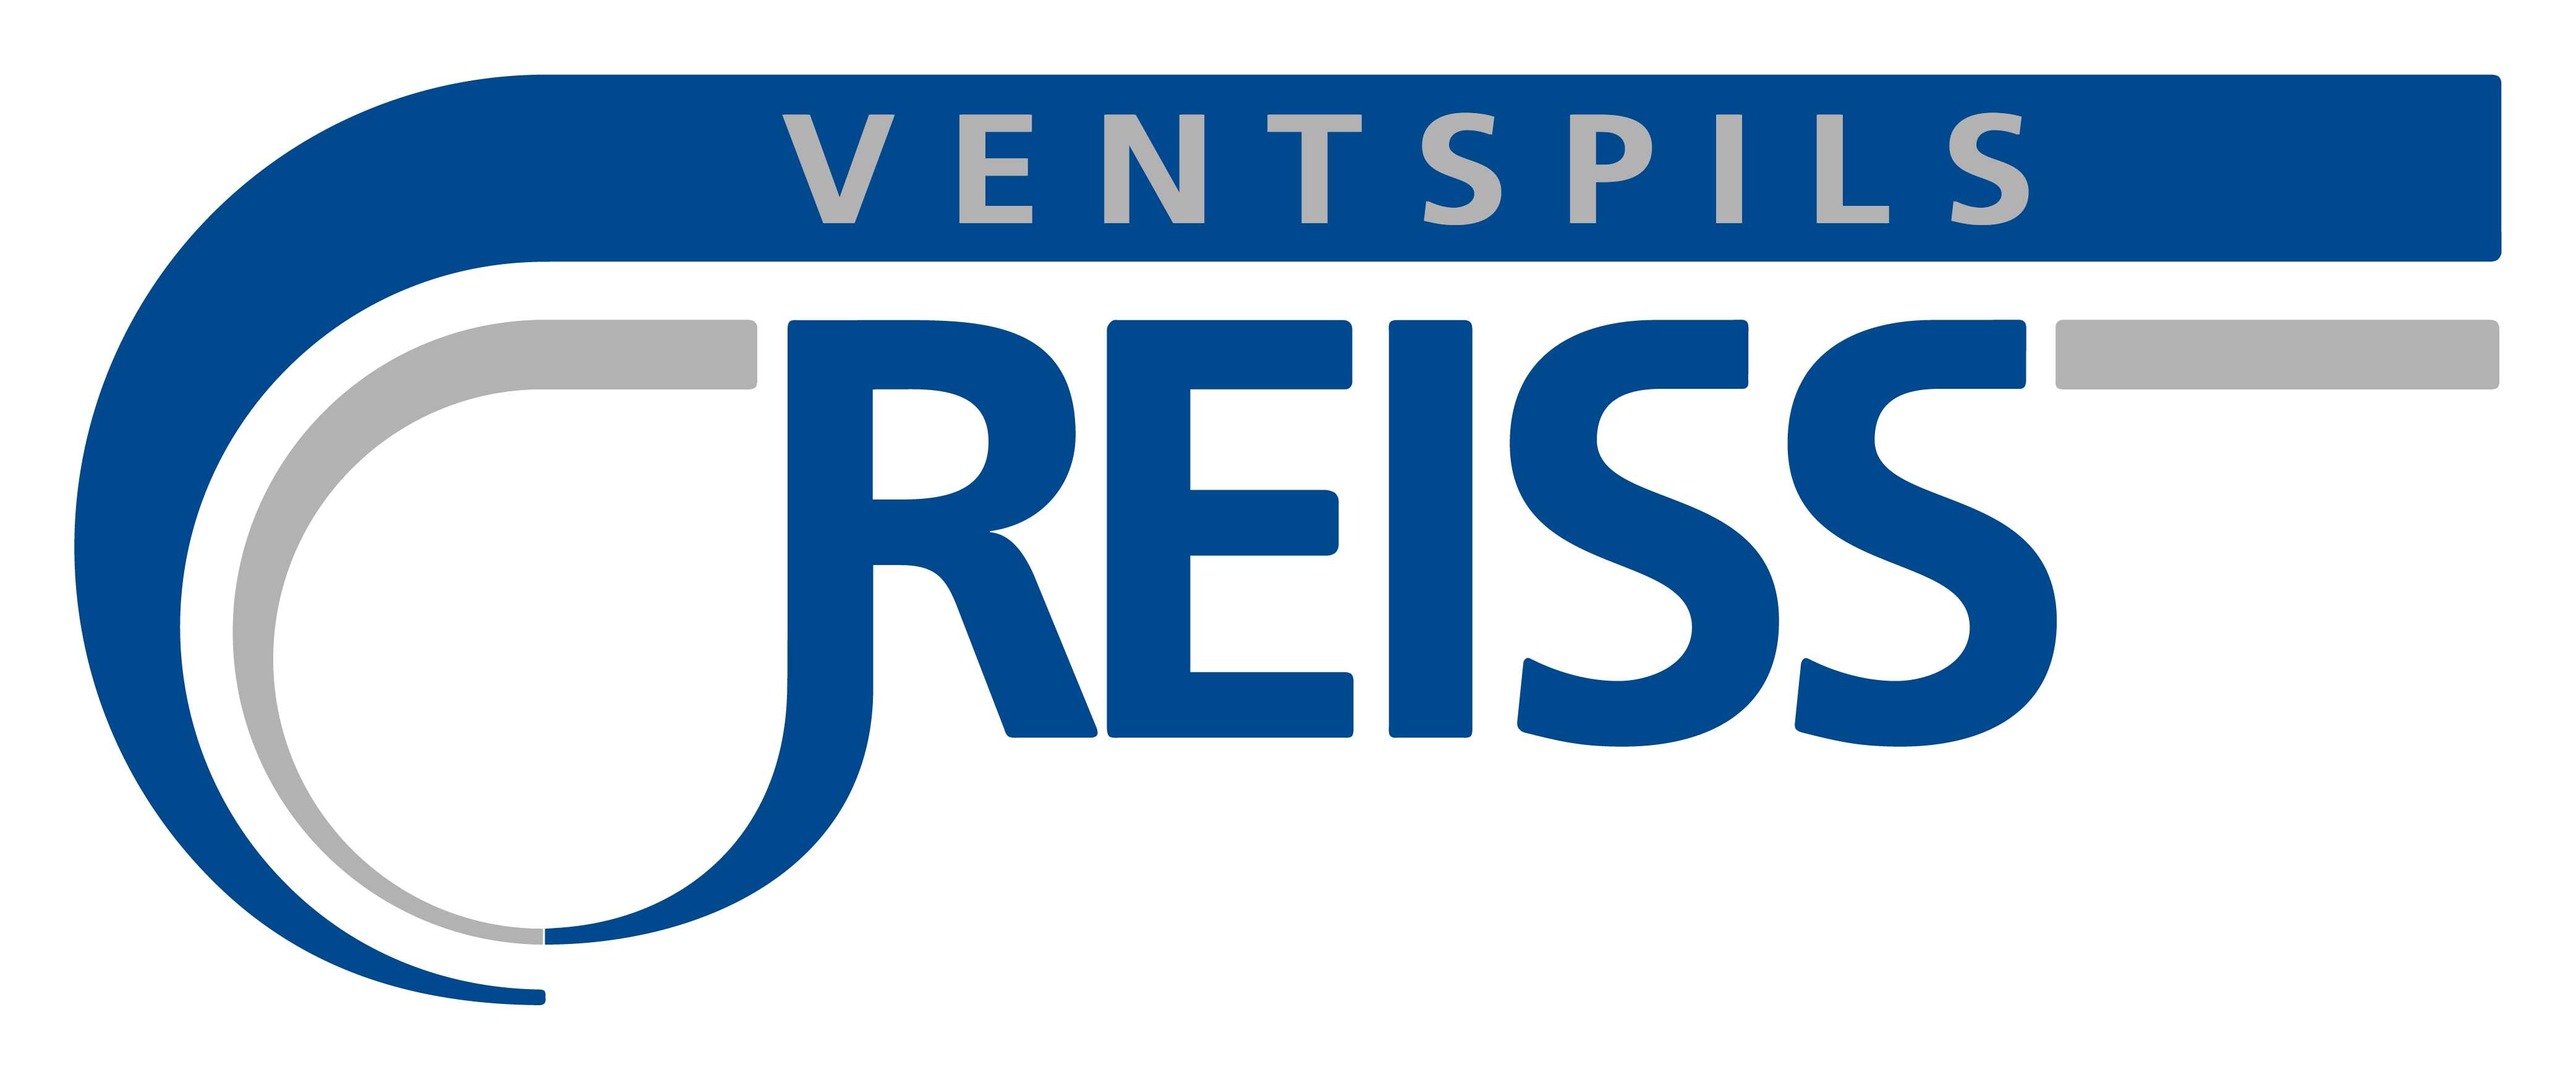 Ventspils reiss logo